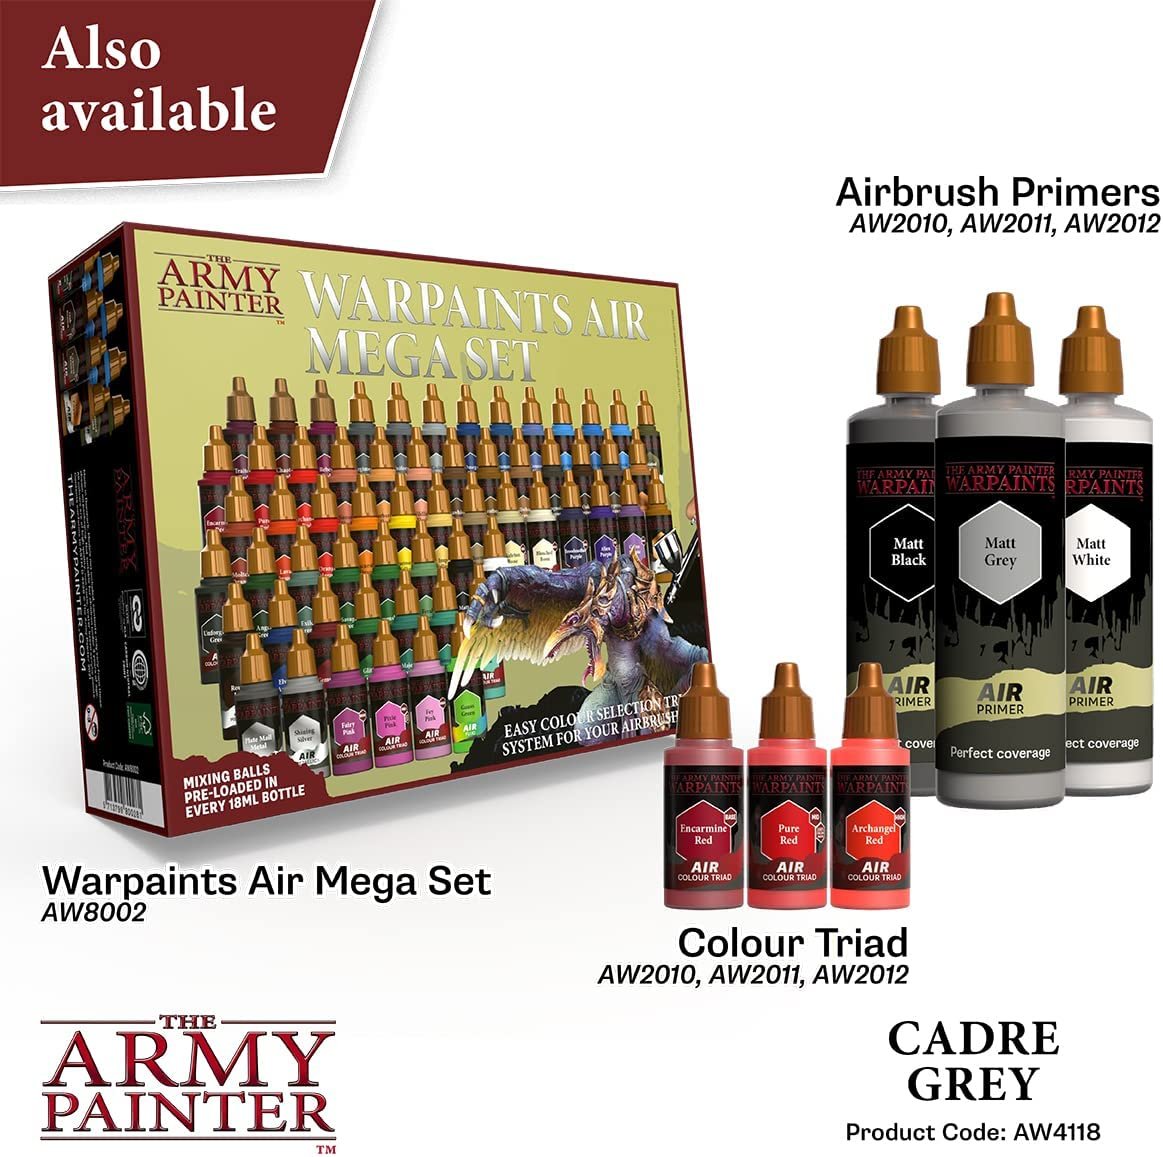 The Army Painter - Warpaints Air: Cadre Grey (18ml/0.6oz)